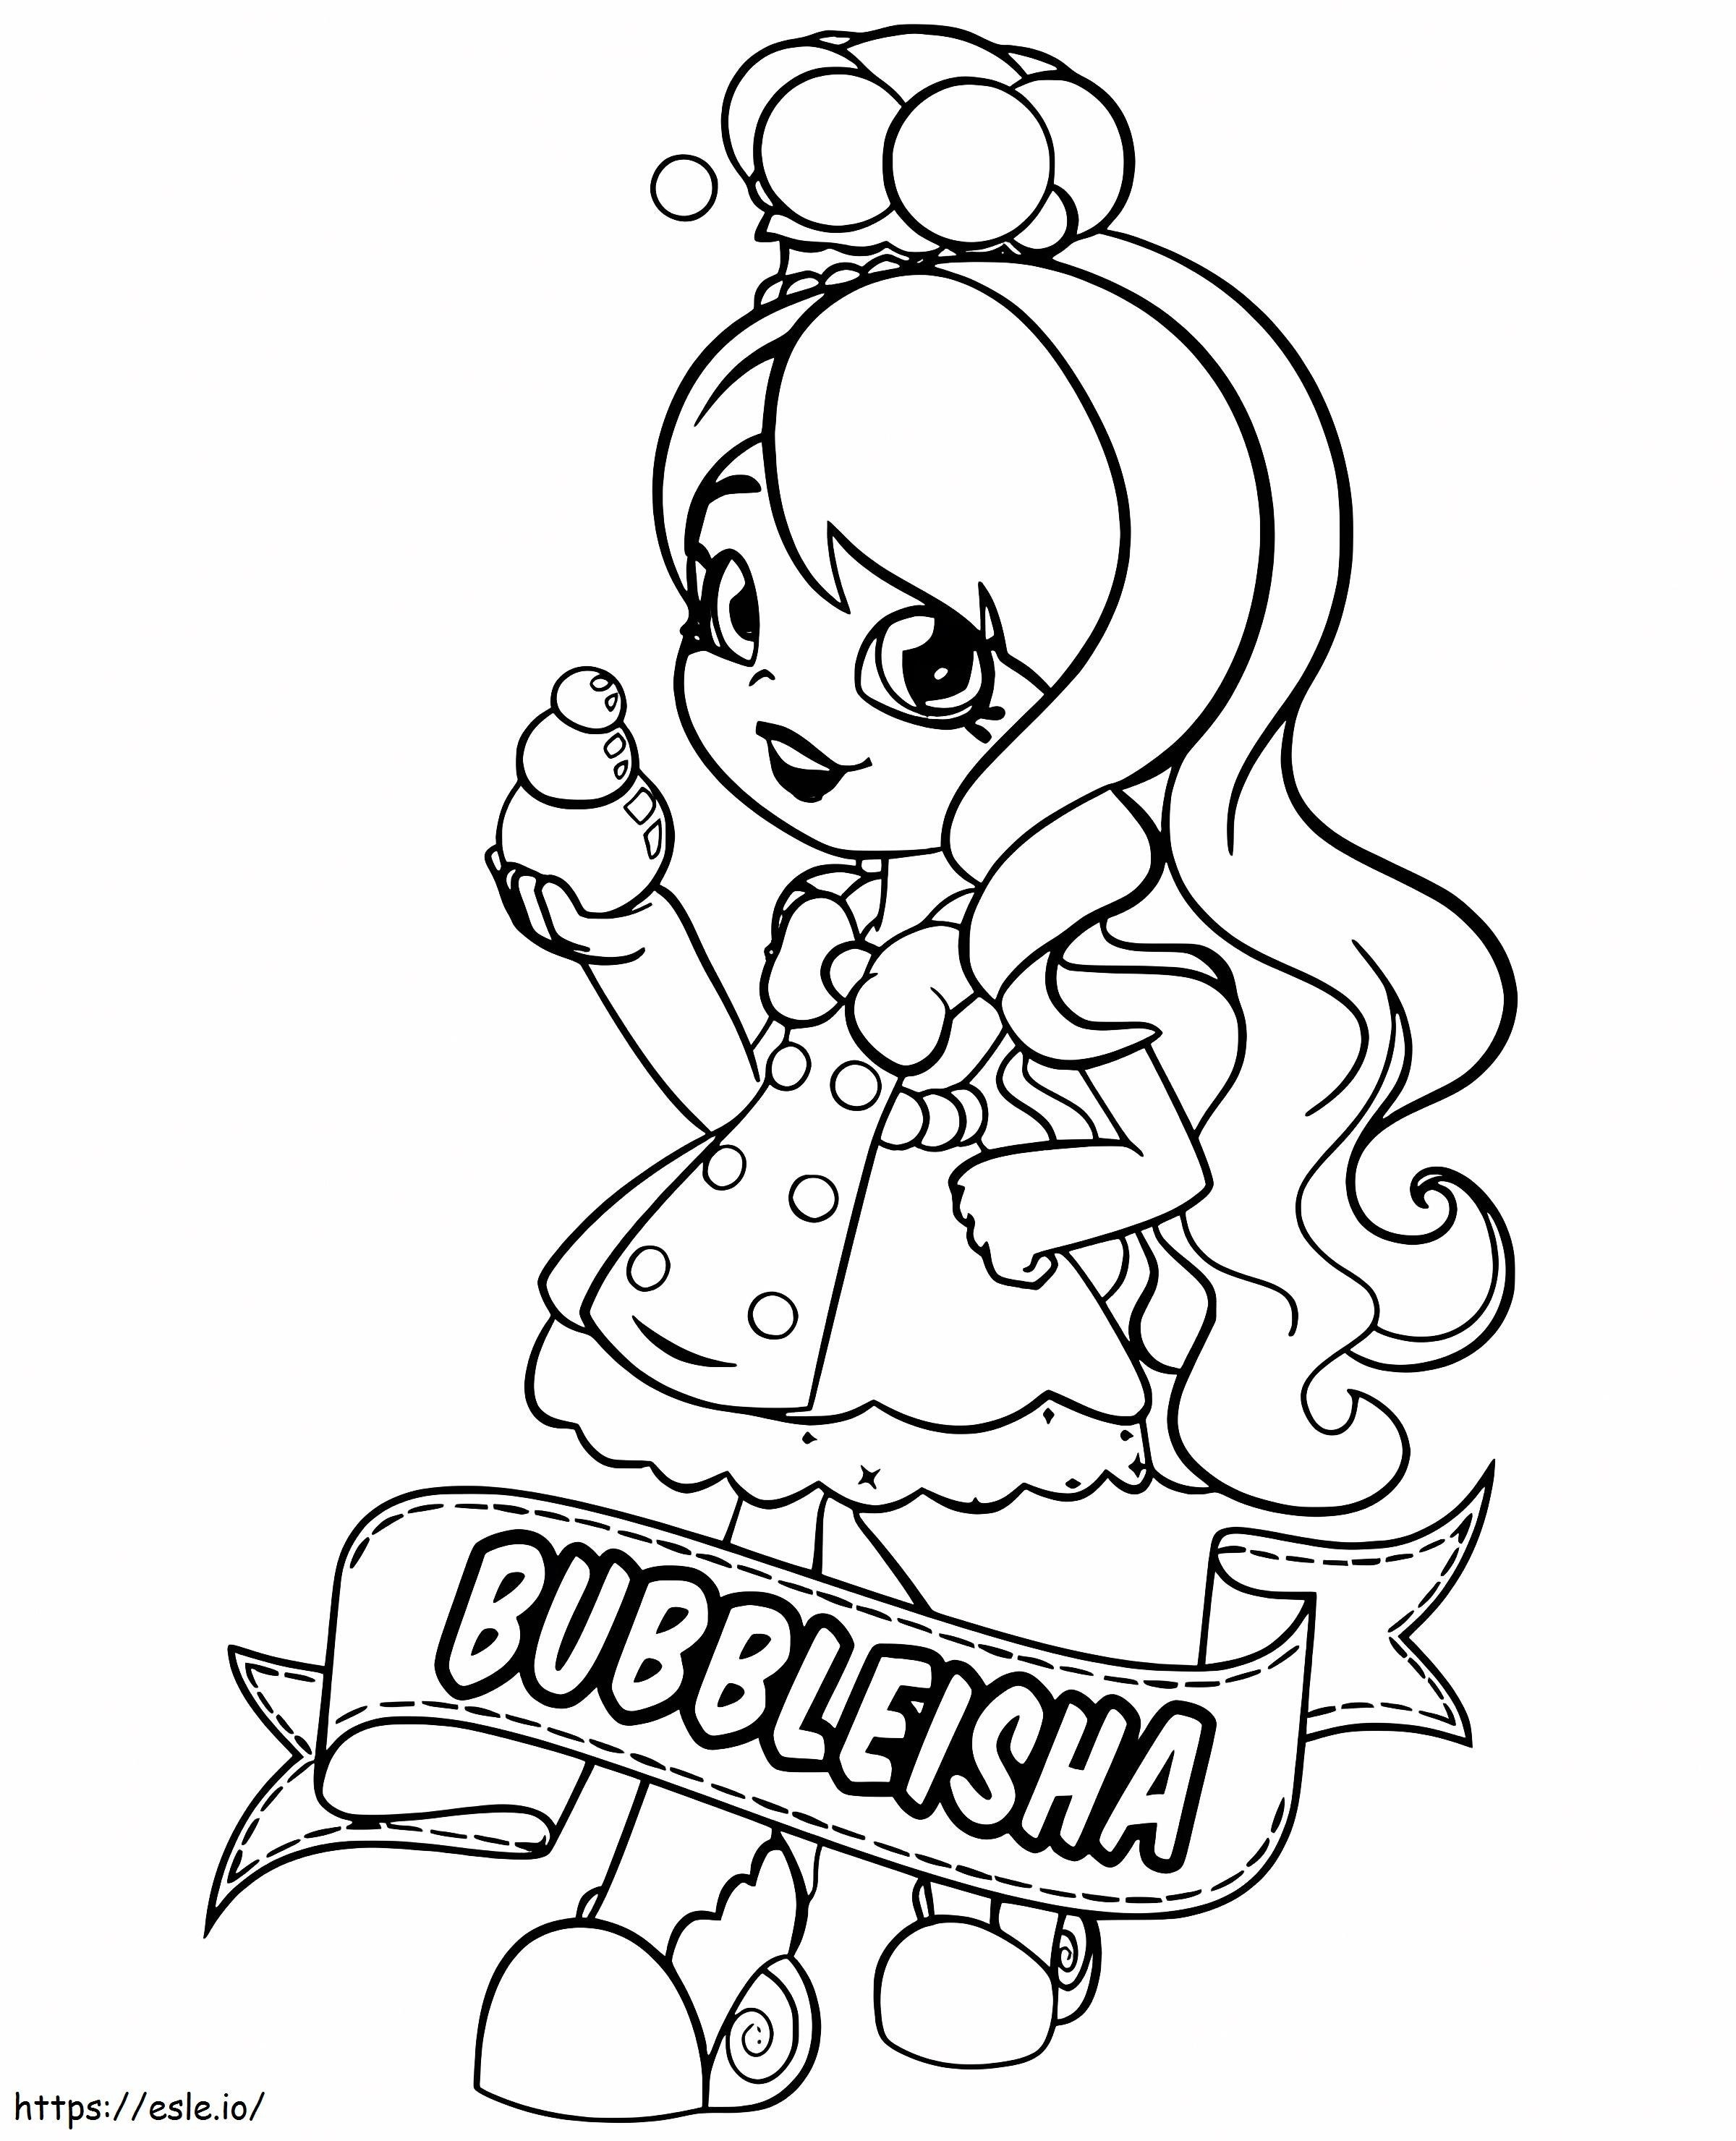 Cute Bubbleisha coloring page